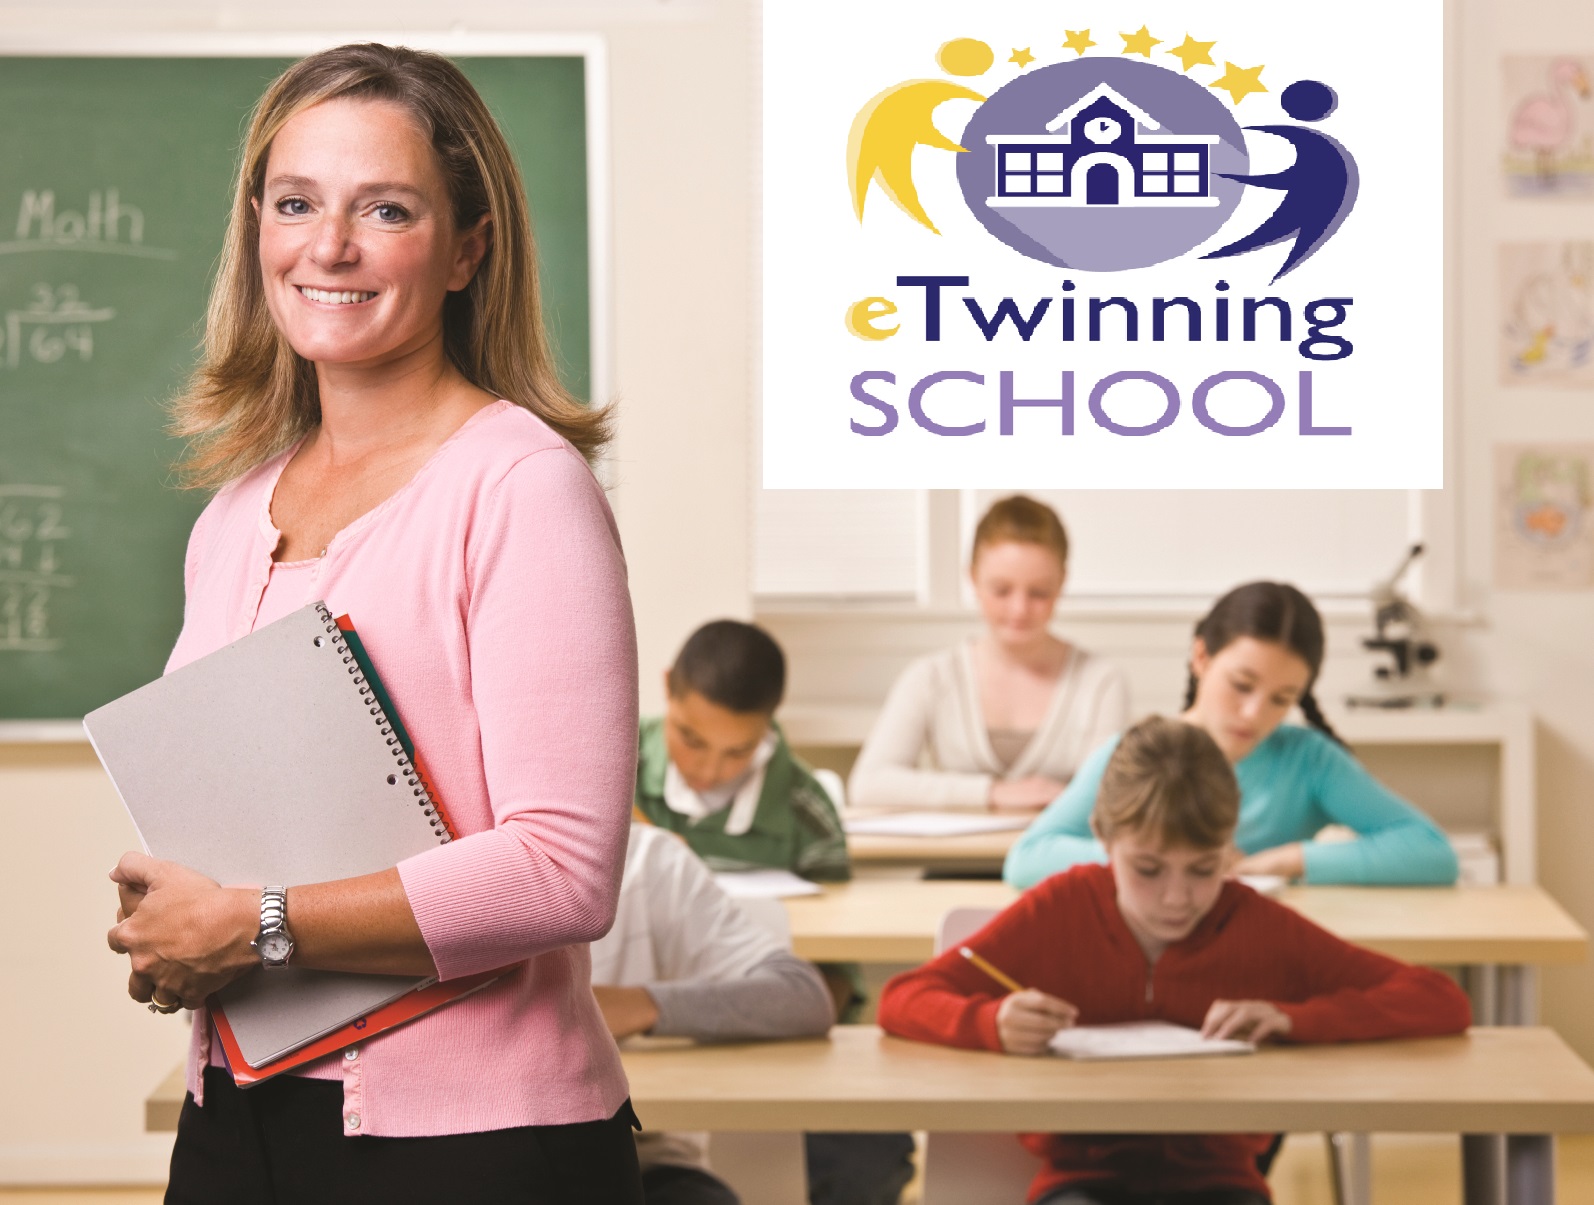 eTwinning launched eTwinning school label